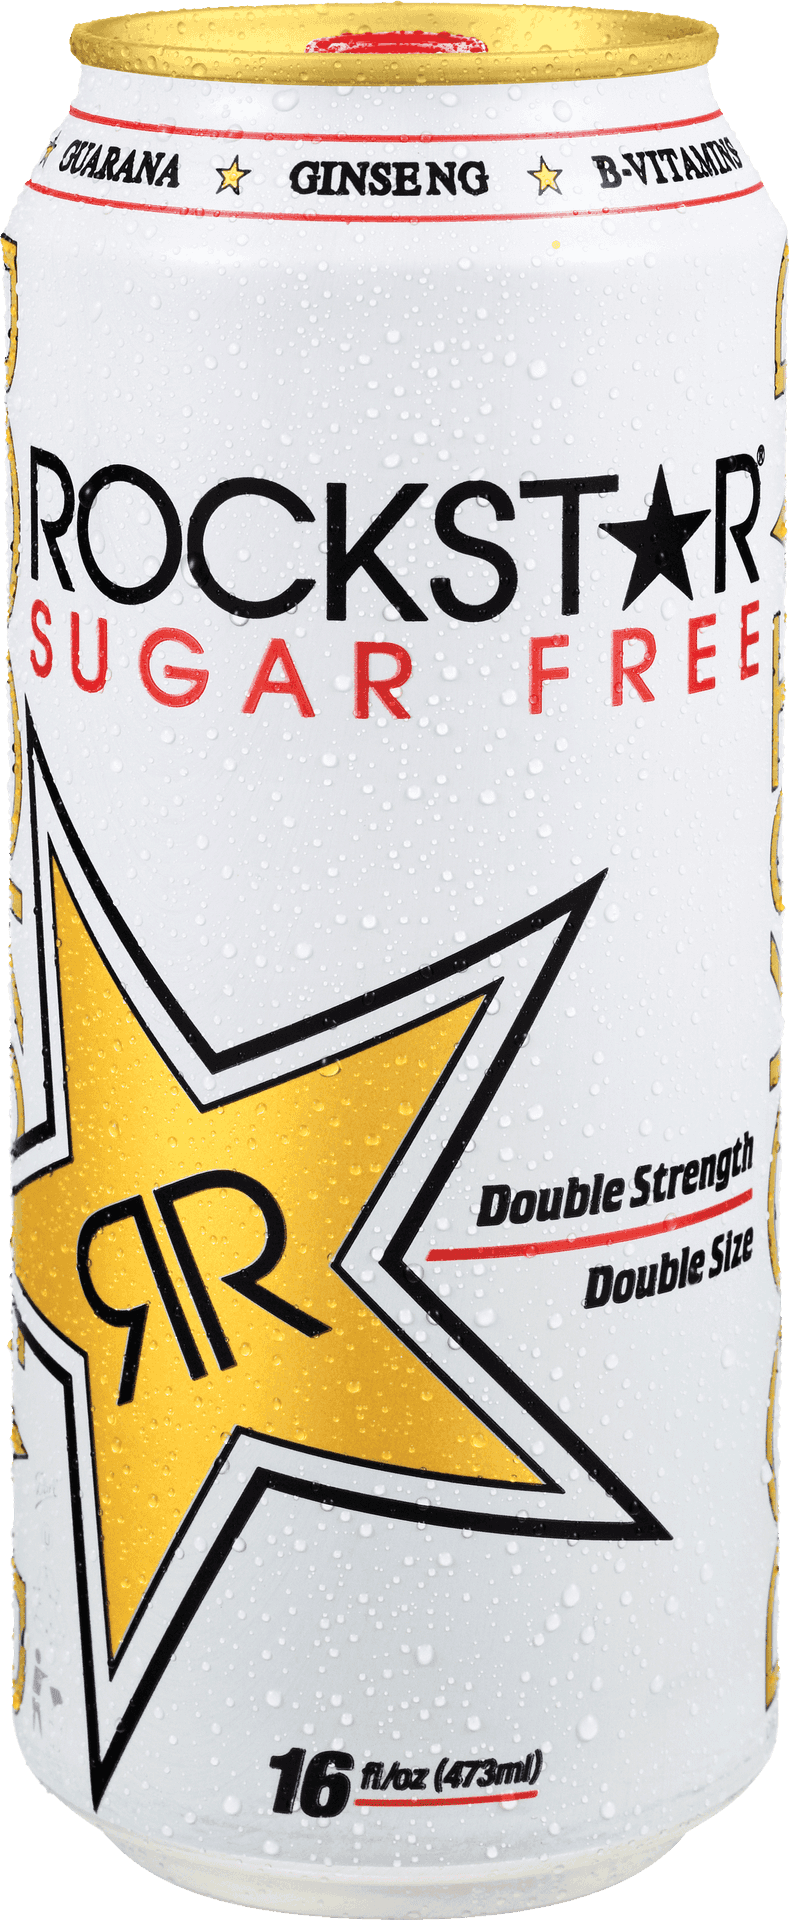 Rockstar Sugar Free Energy Drink Can PNG